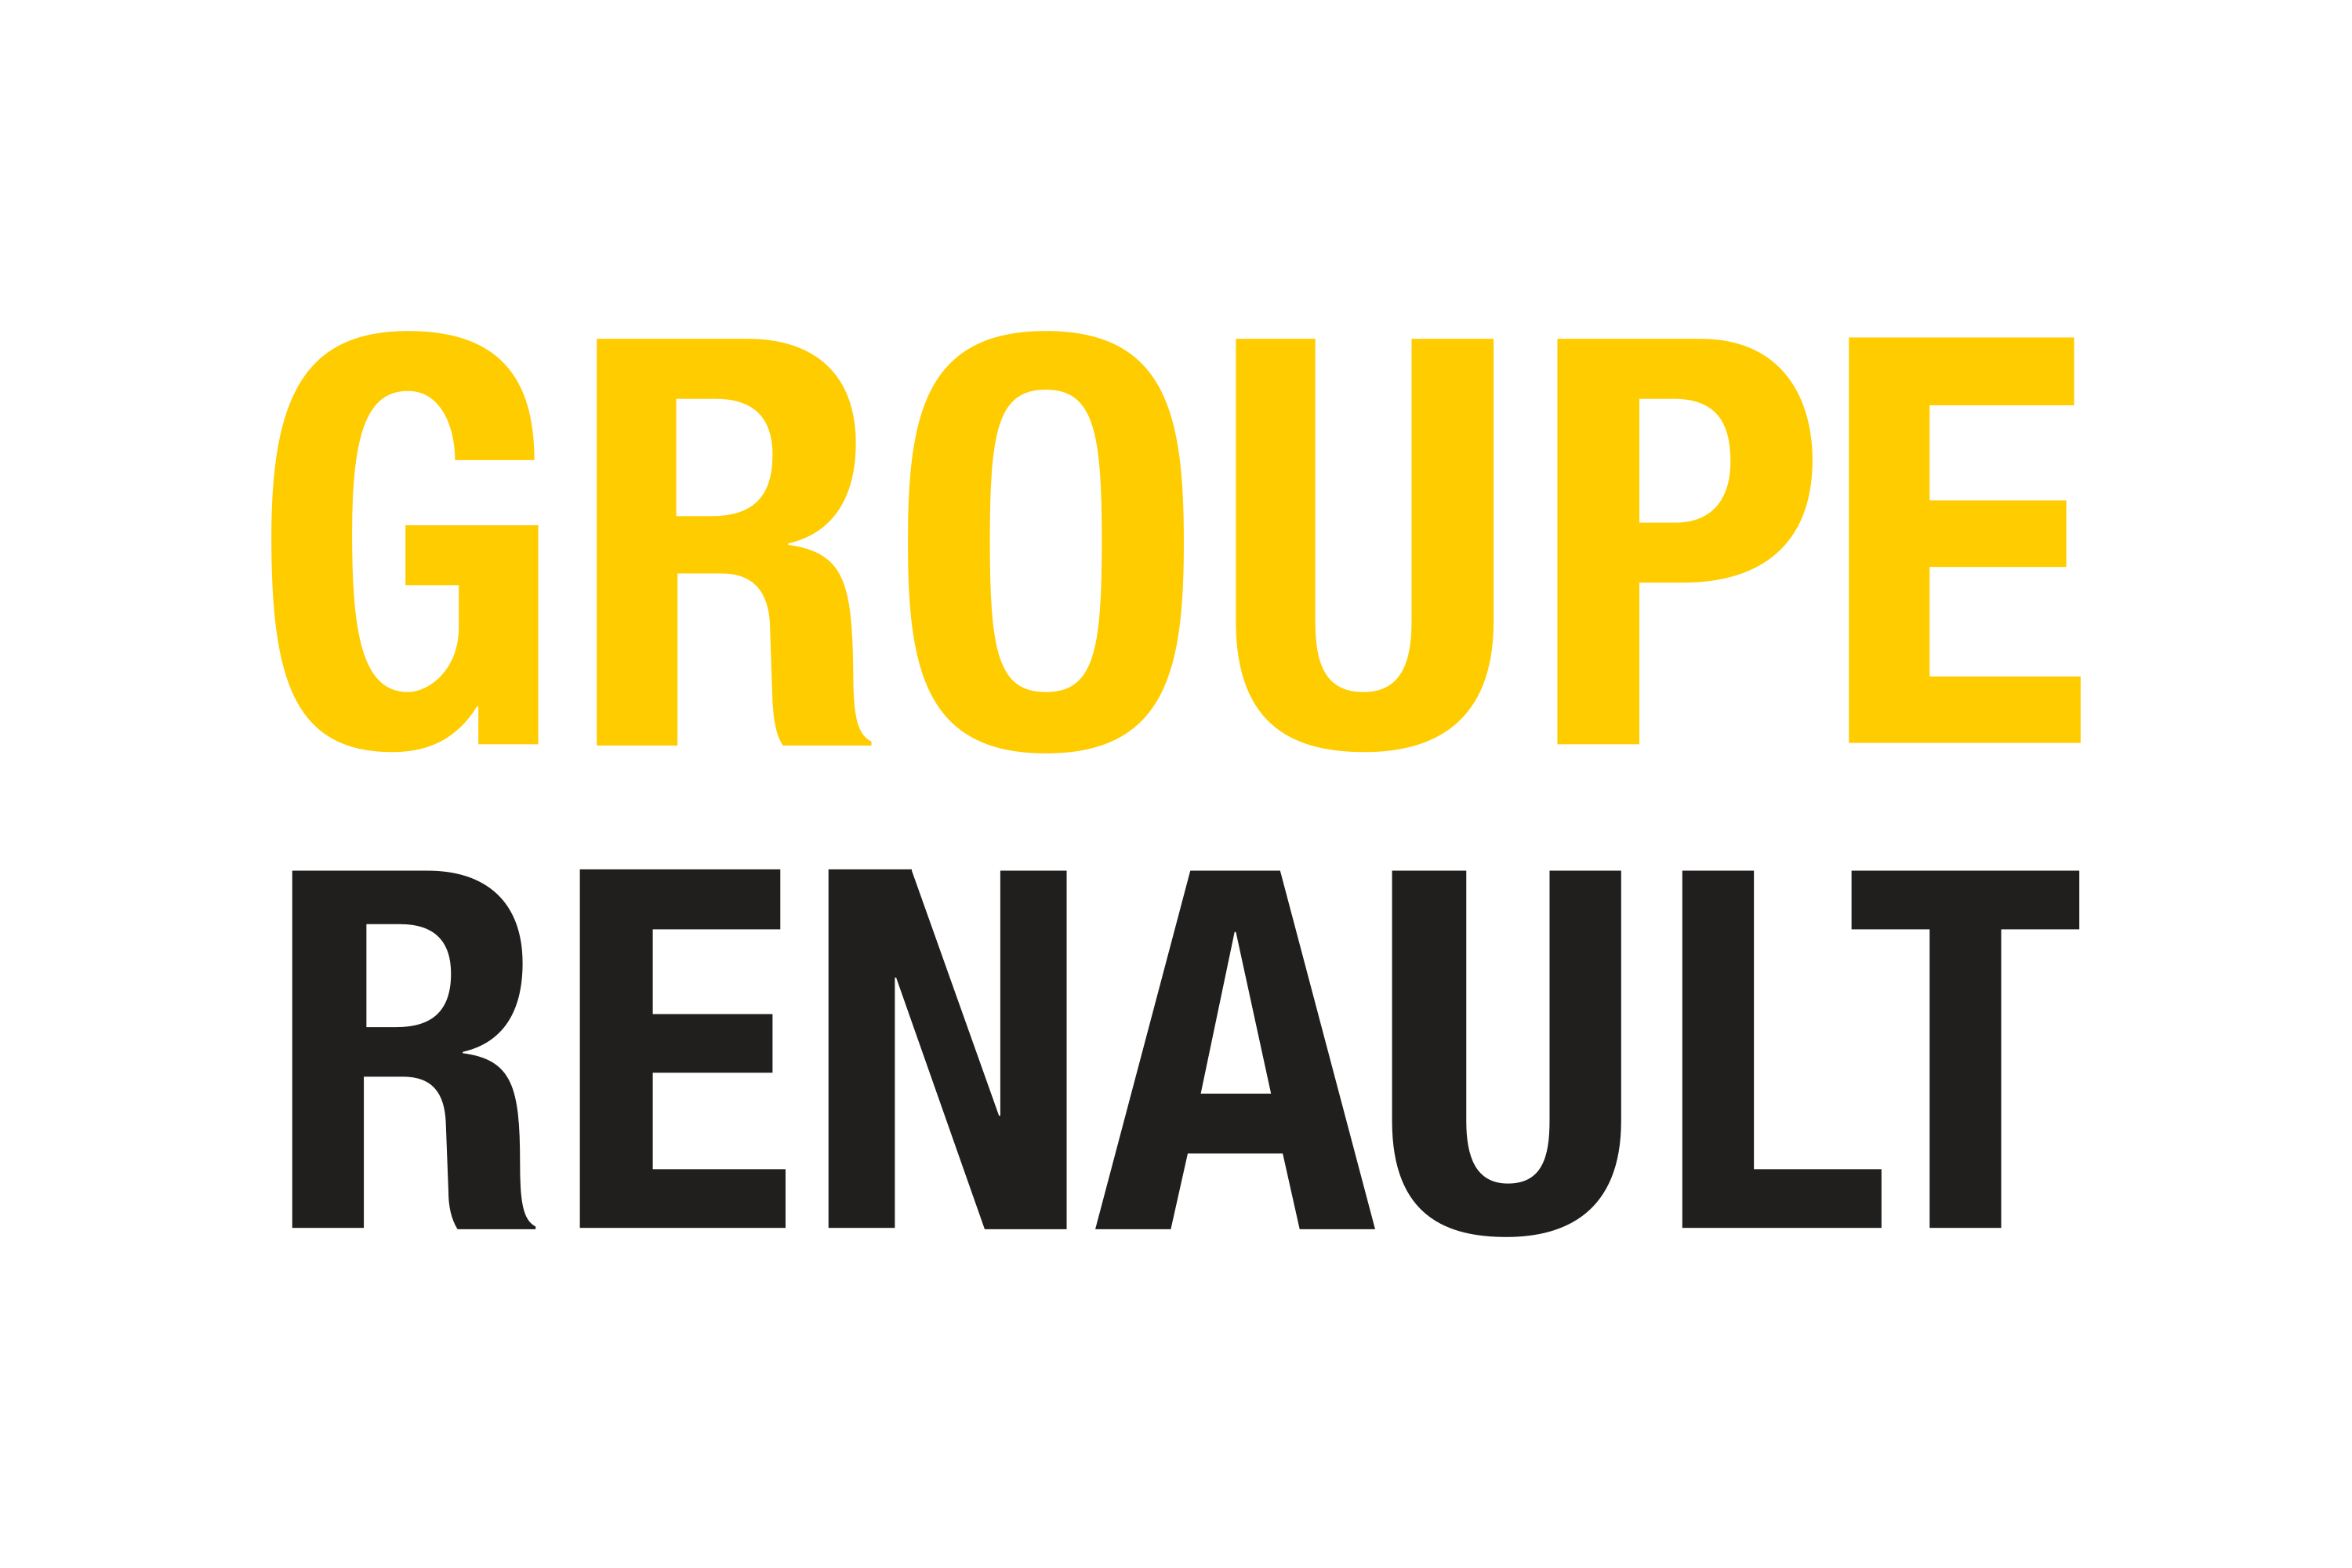 Renault group